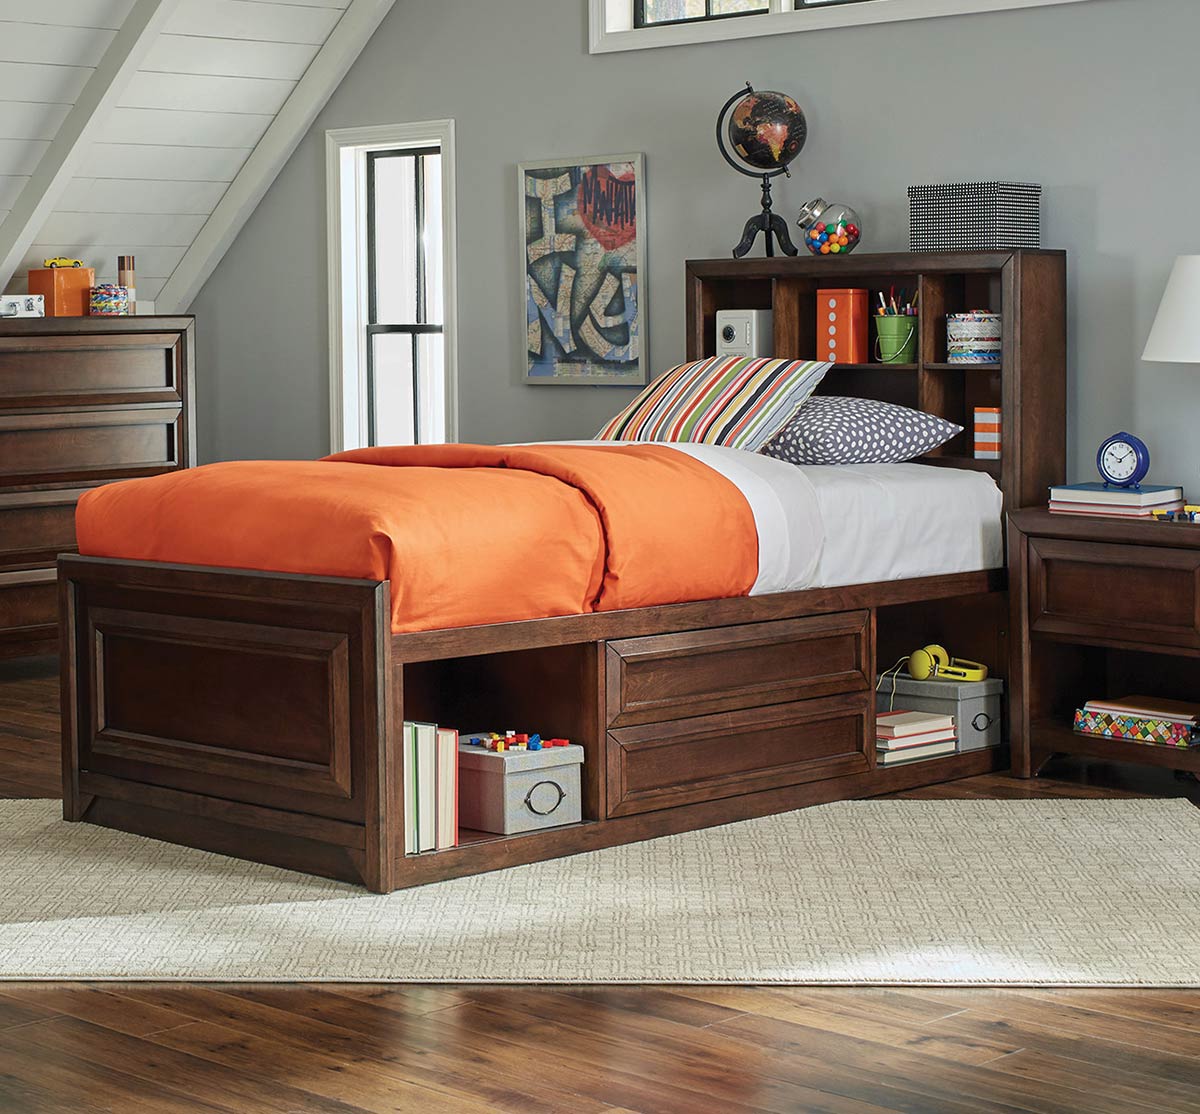 Coaster Greenough Twin Size Storage Bed - Maple Oak